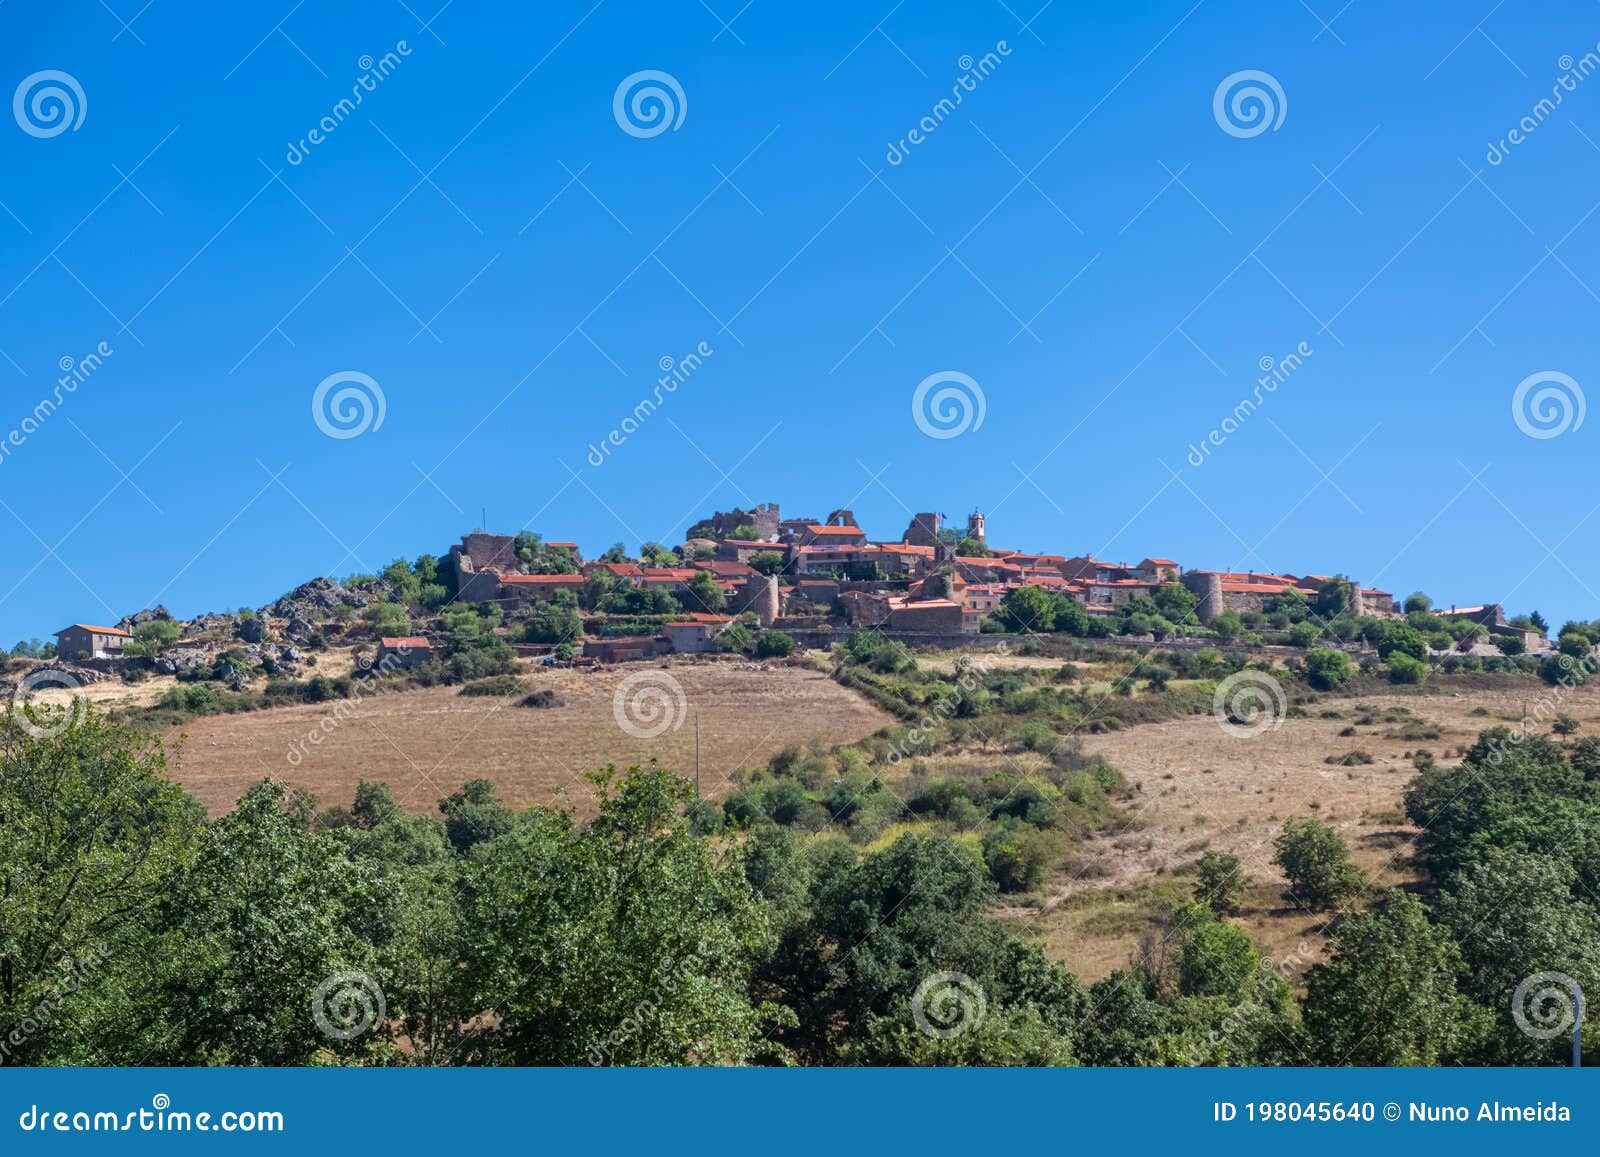 full view at the figueira de castelo rodrigo medieval village, exterior fortress, iconic and touristic portuguese patrimony